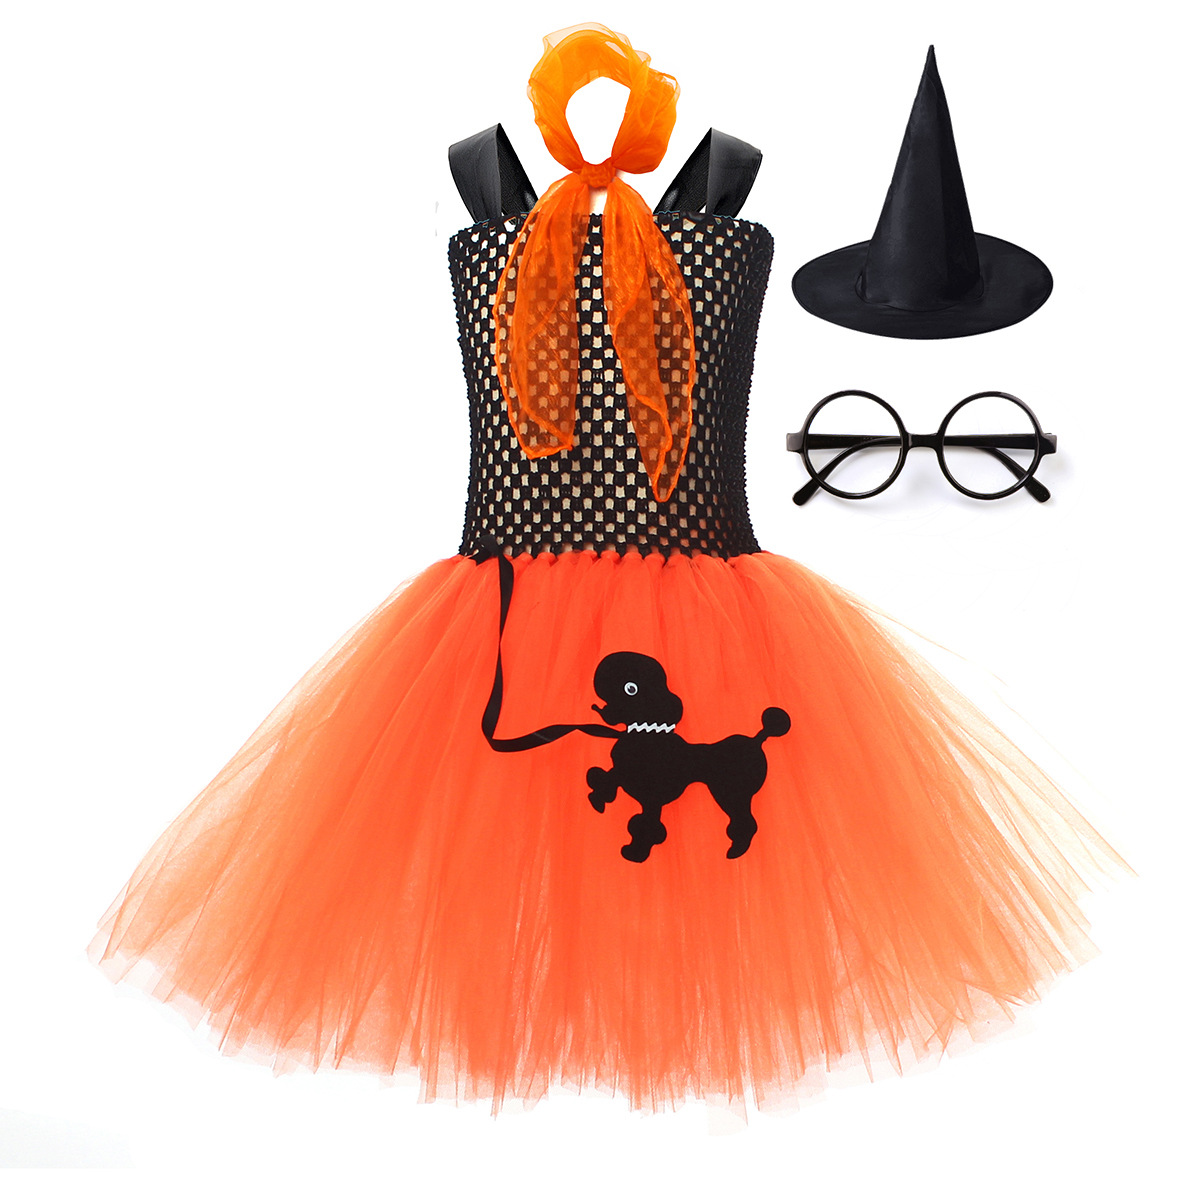 torrid orange dress with accessories